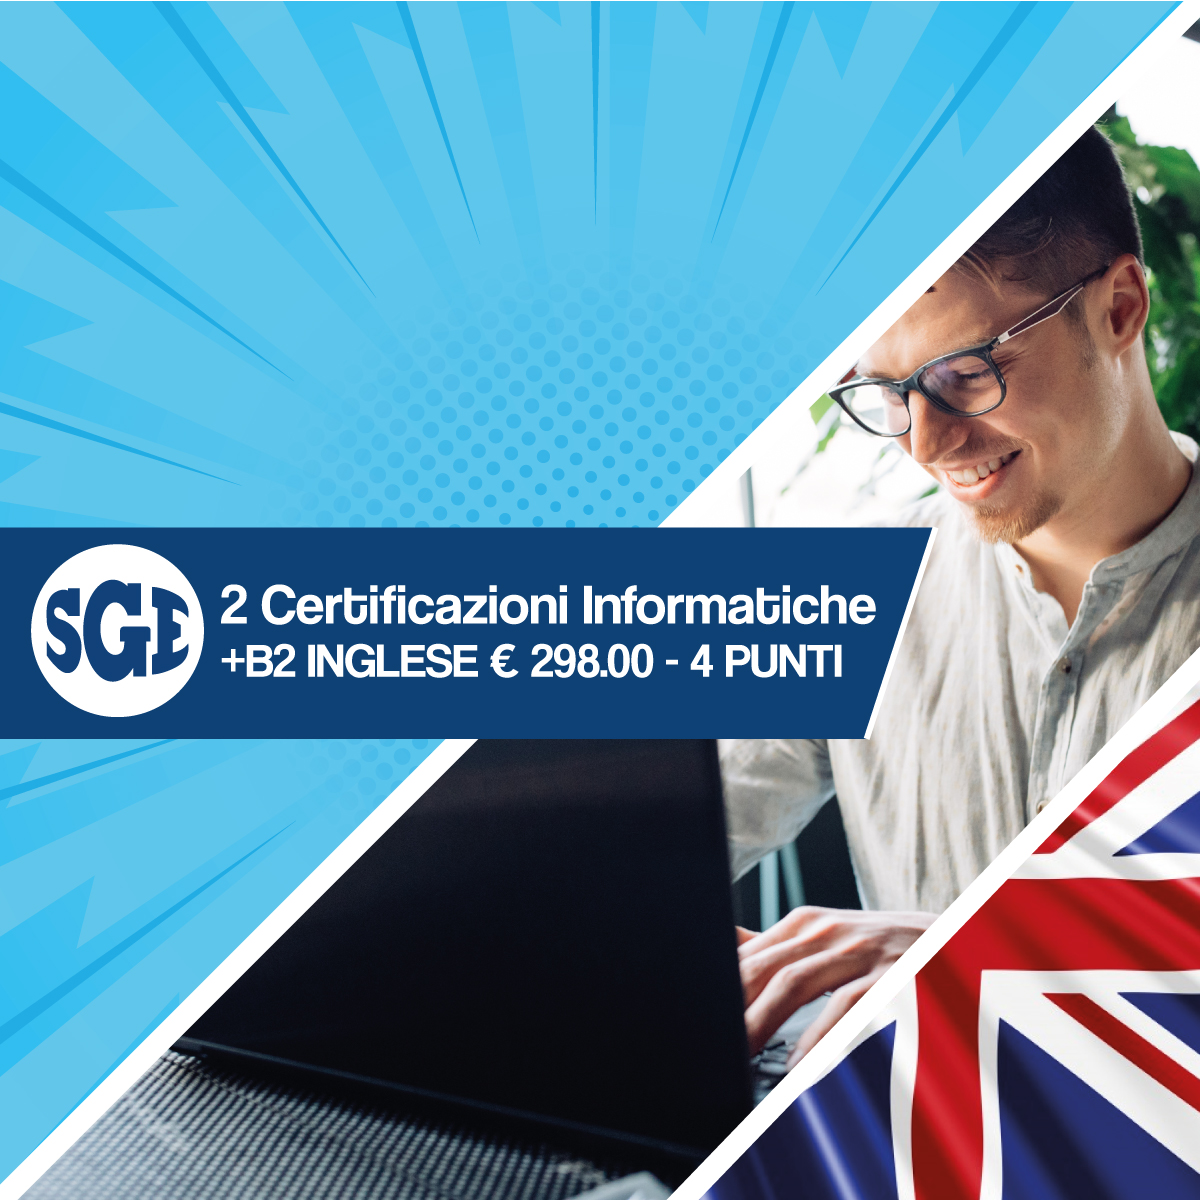 3 Certificazioni Informatiche +B2 INGLESE €499.00 - 4,5 PUNTI